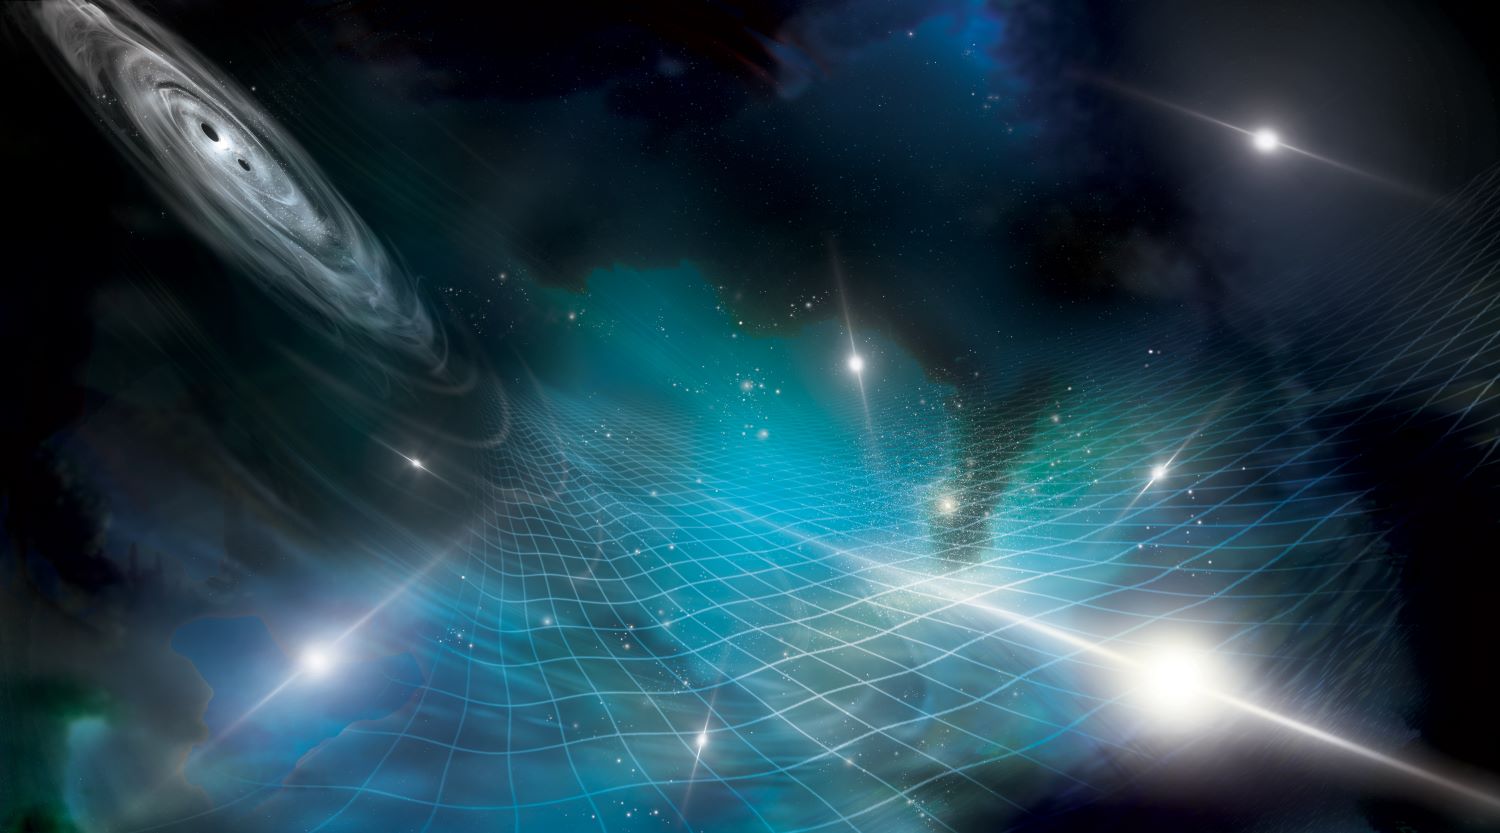 NANOGrav detects new gravitational waves Popular Science